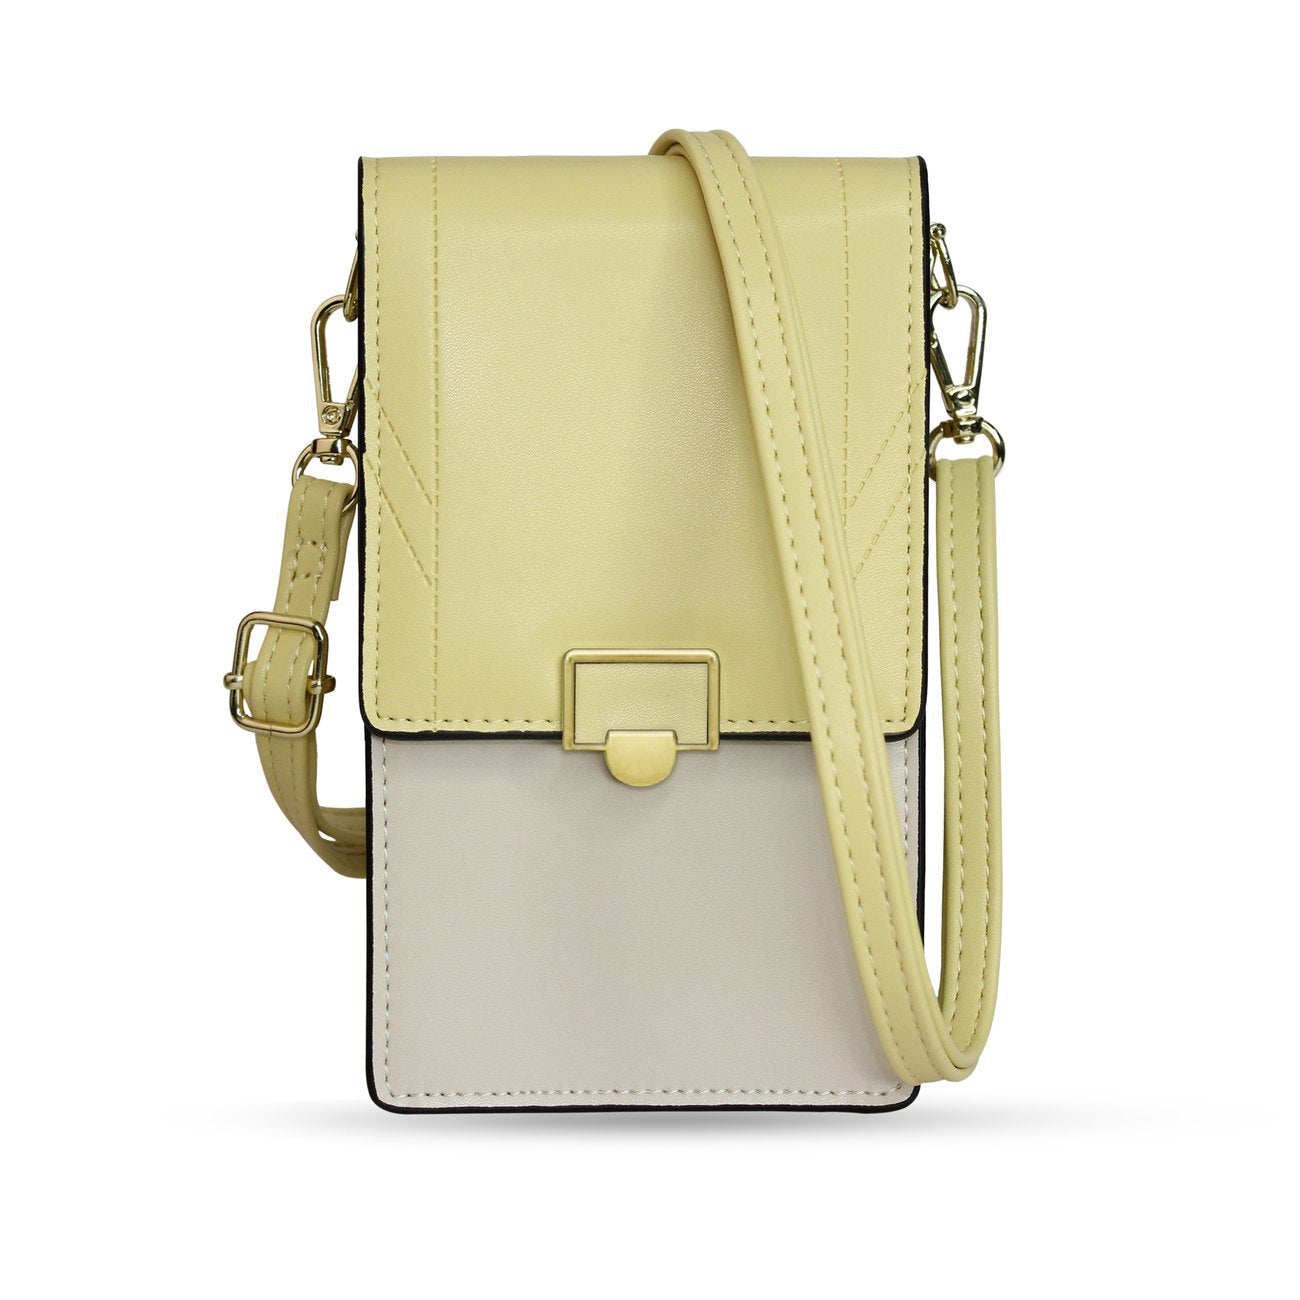 Fancy Bag Case Handmade Pouch High Quality Bag Smartphone Purse With Shoulder Strap Wallet Gold (Model 2)